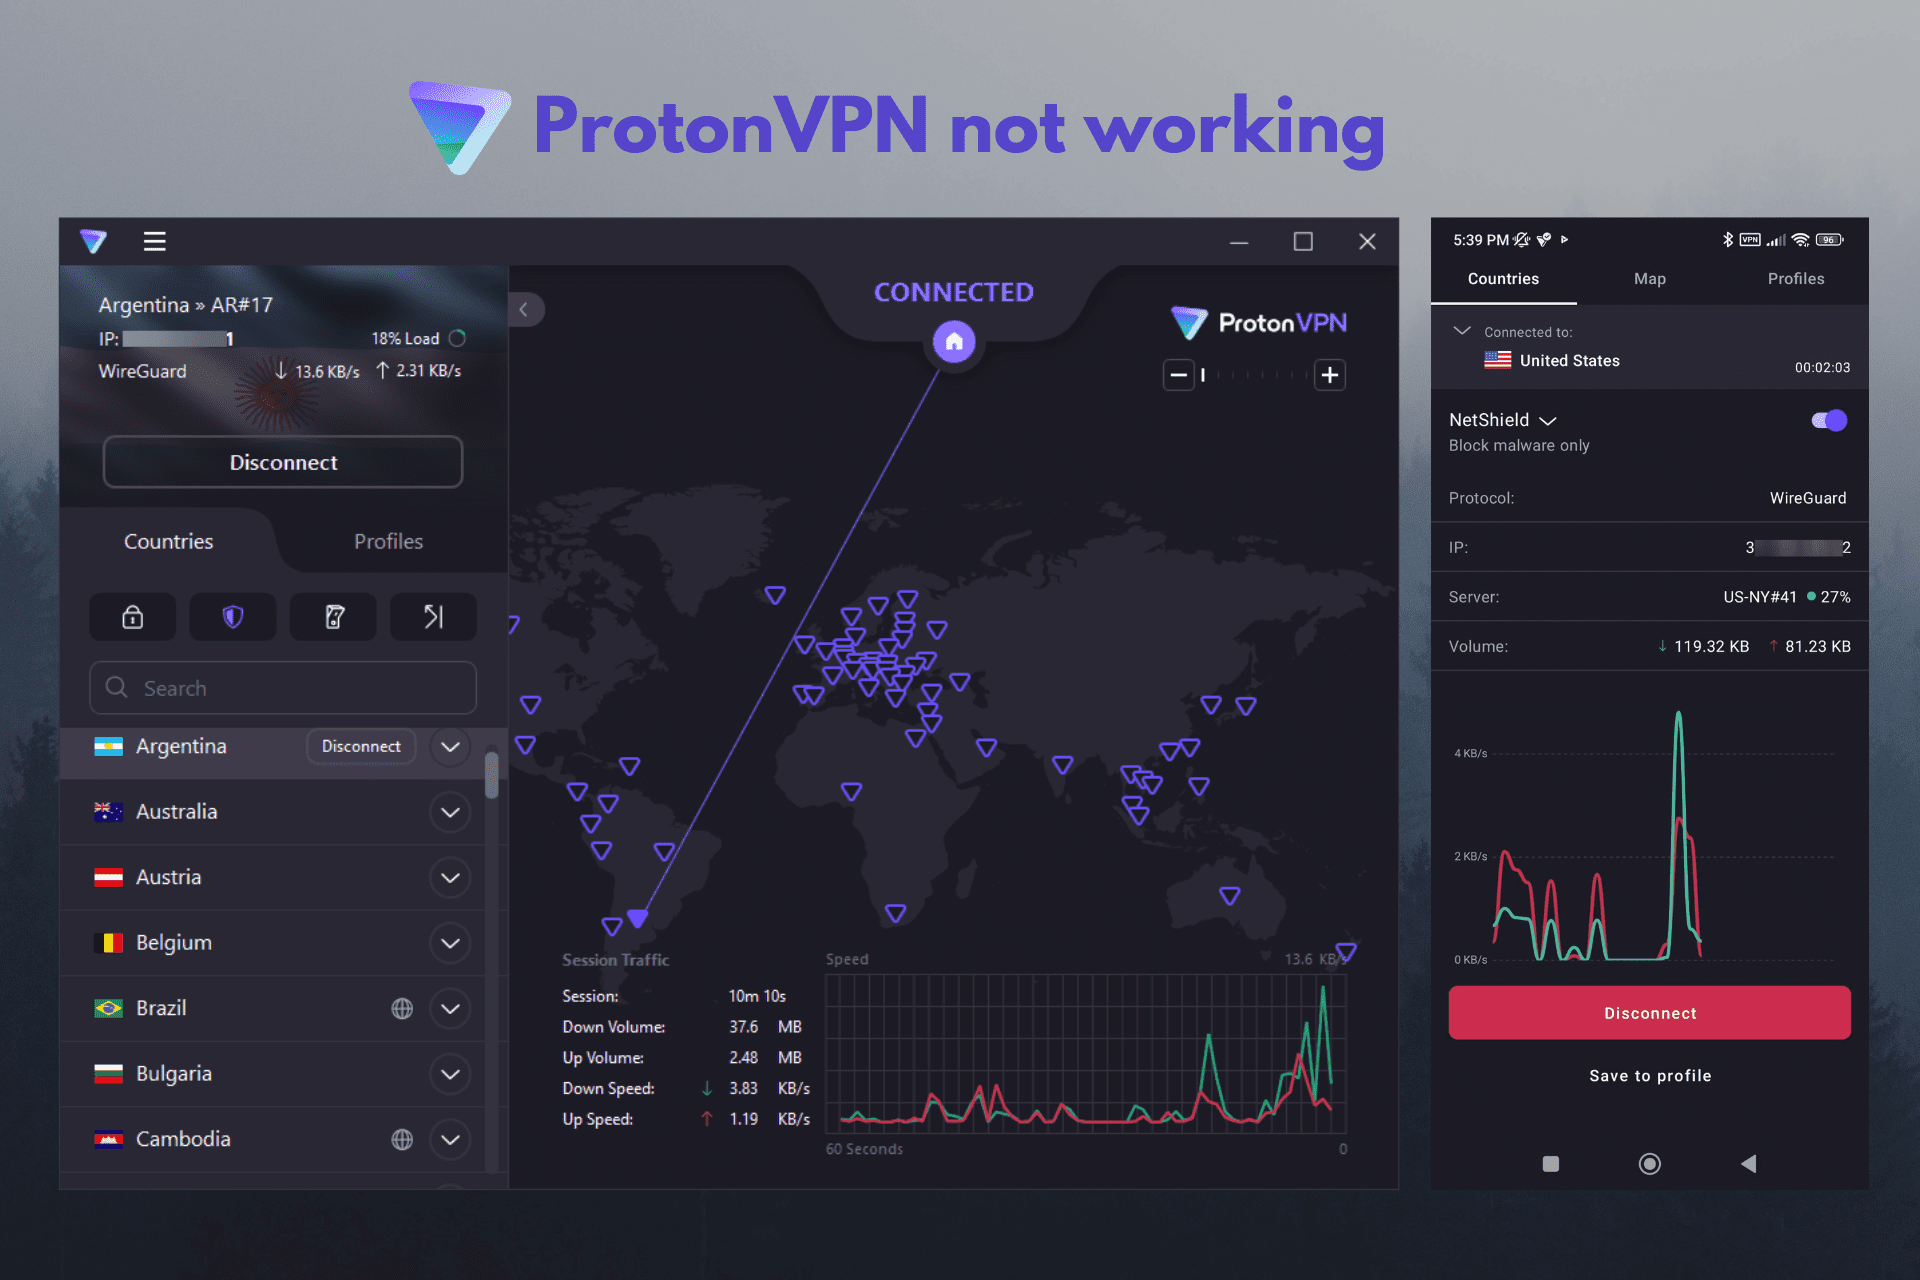 Fix ProtonVPN not working